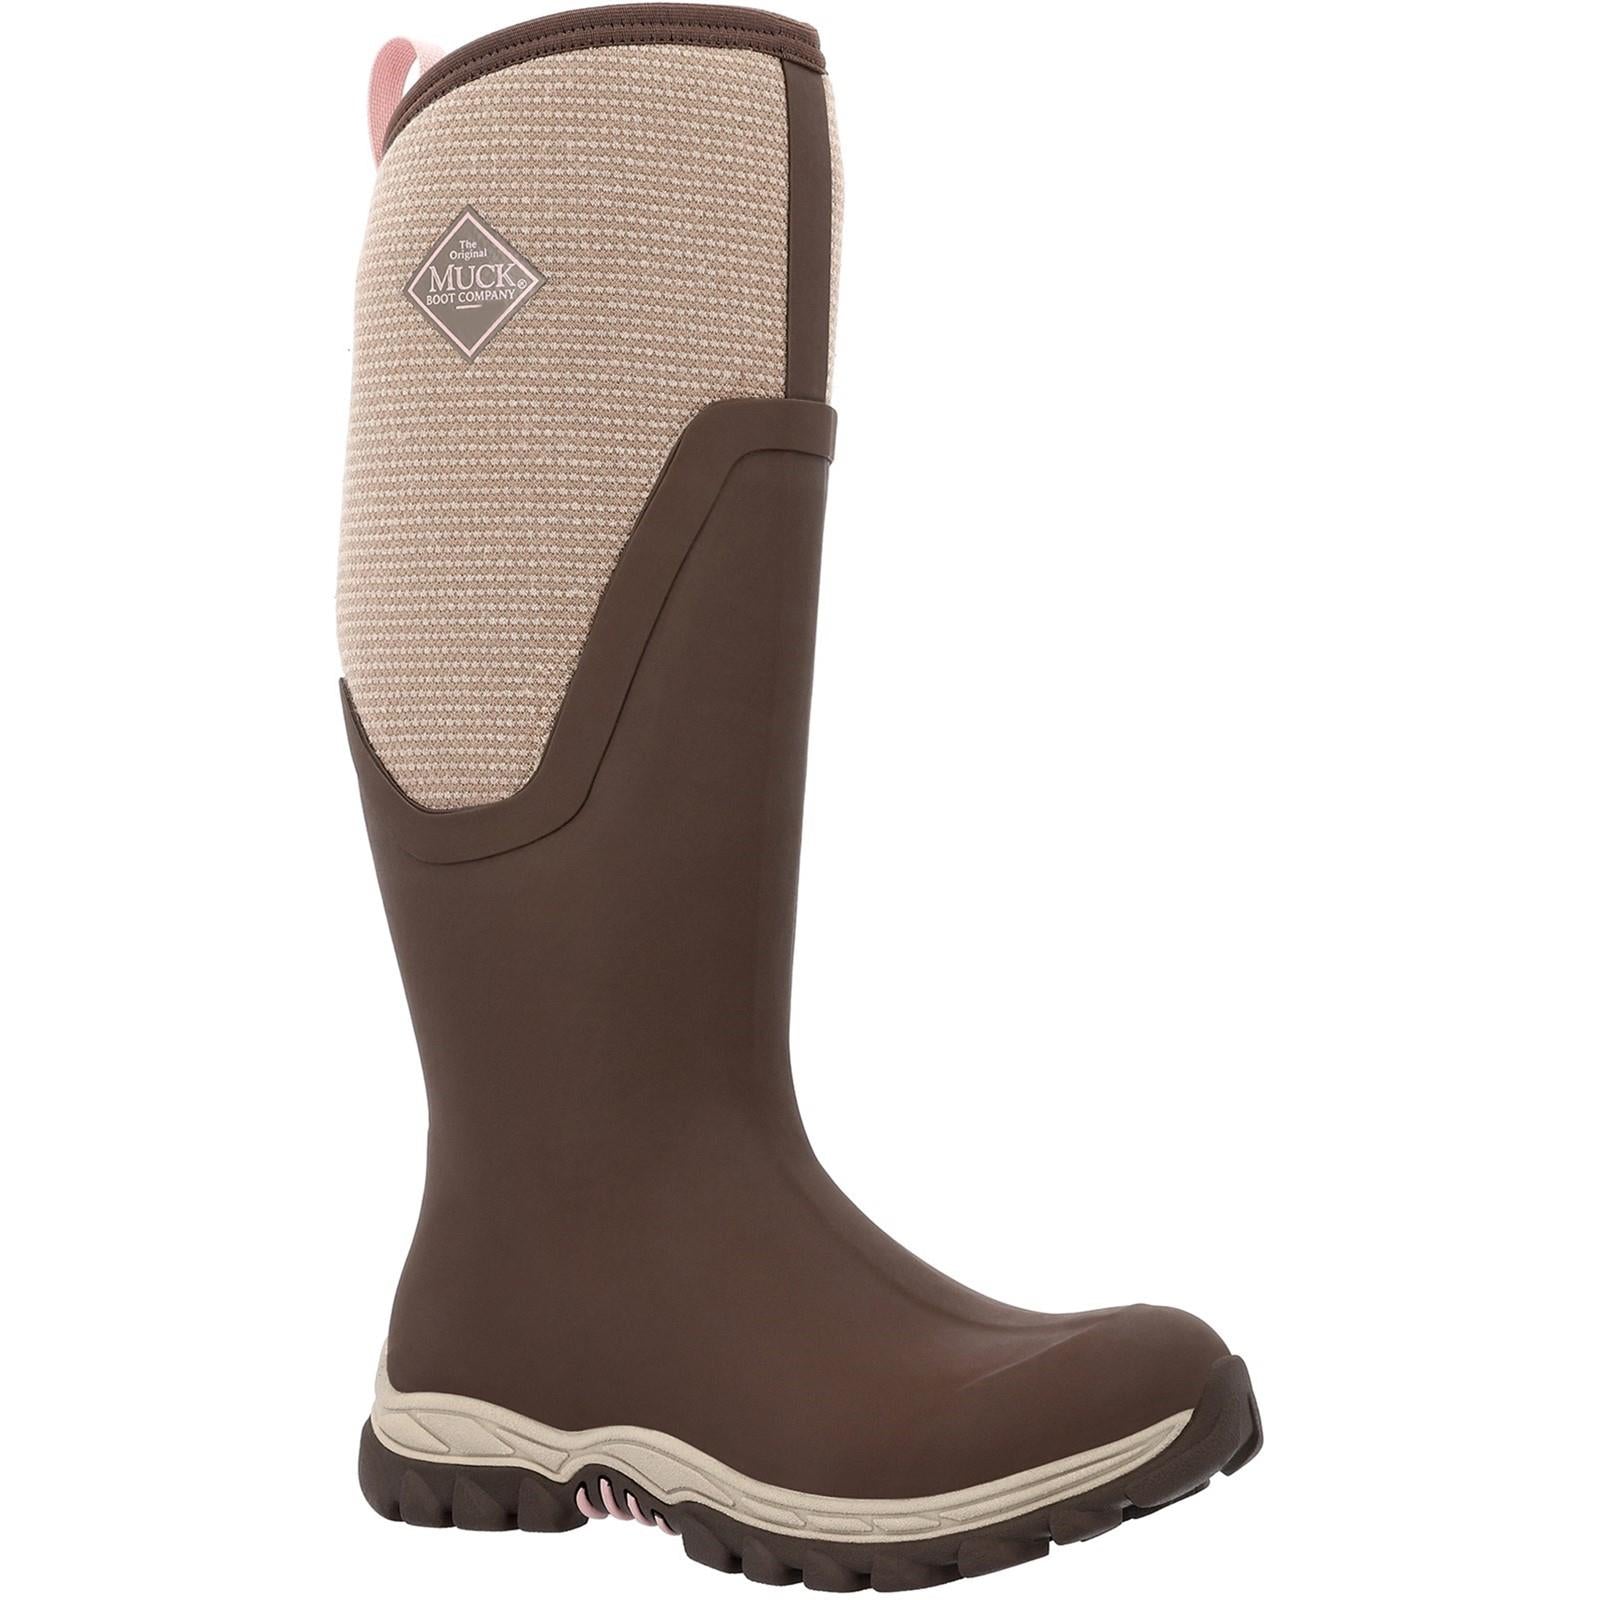 Muck Boots Arctic Sport II Tall ladies brown warm fleece lined wellington boots